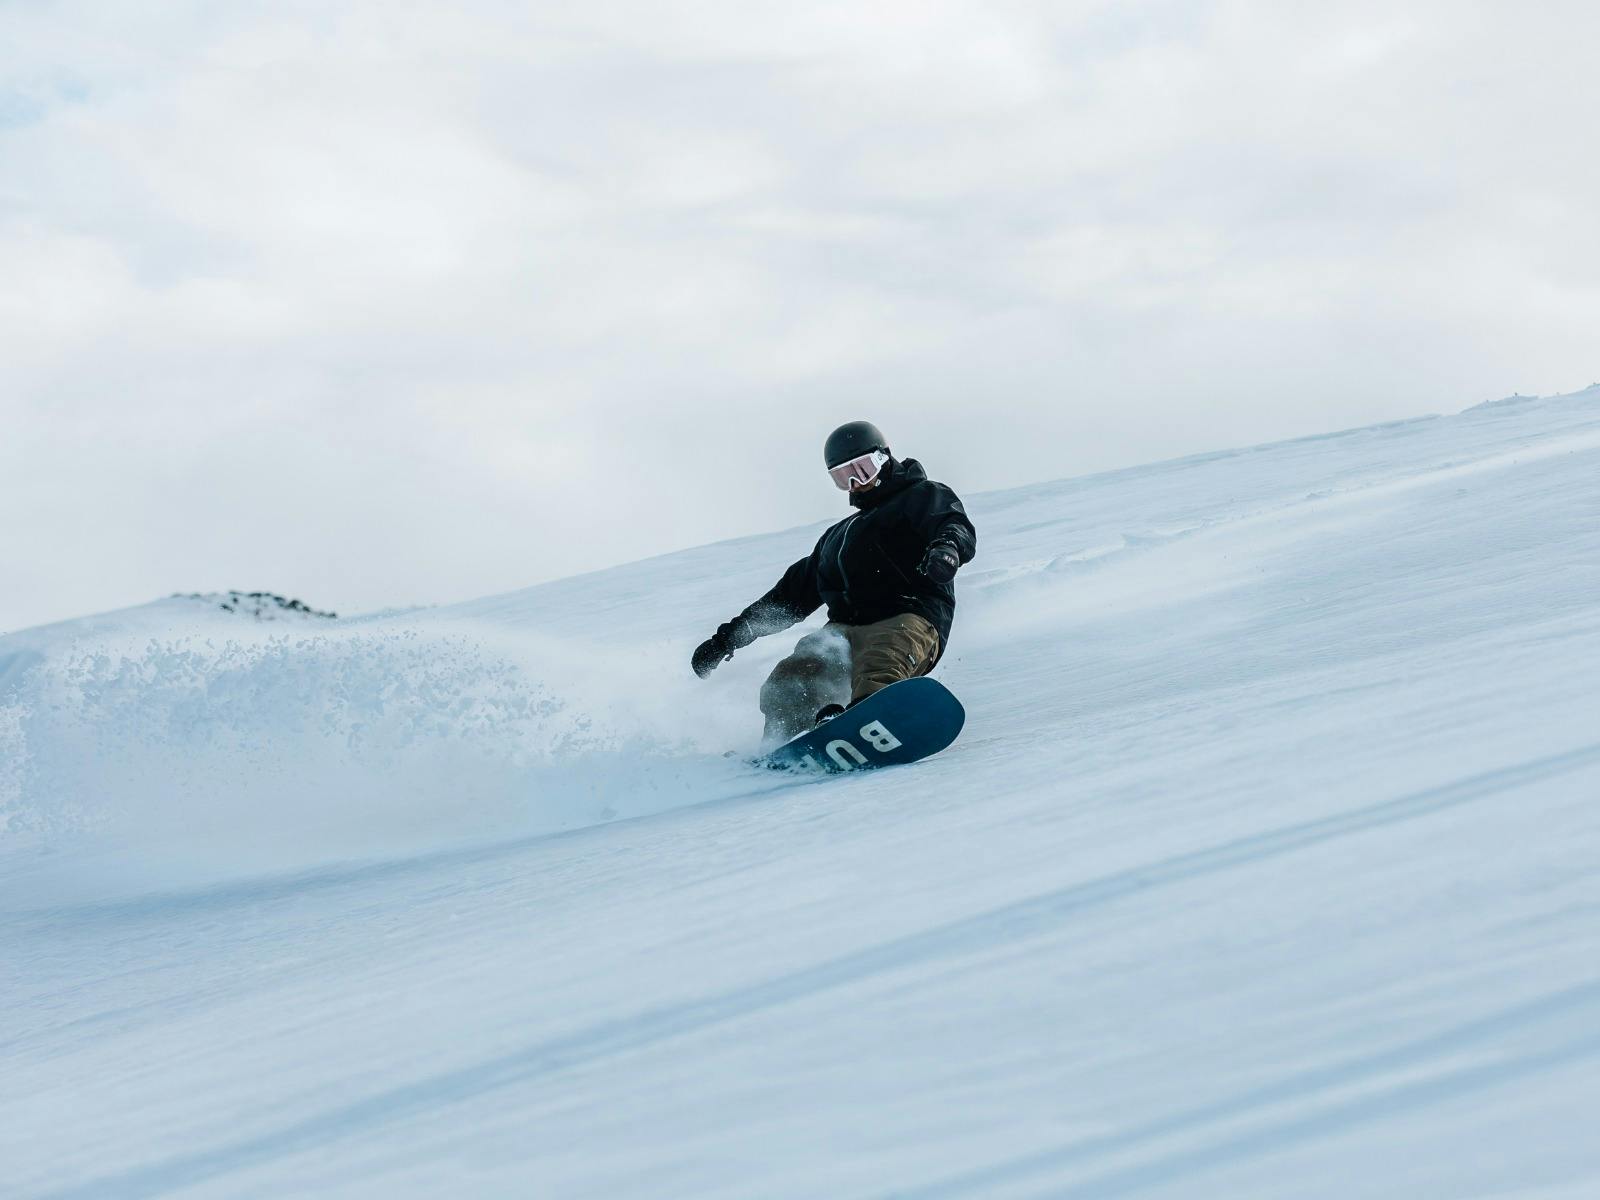 man snowboarding on fresh snow